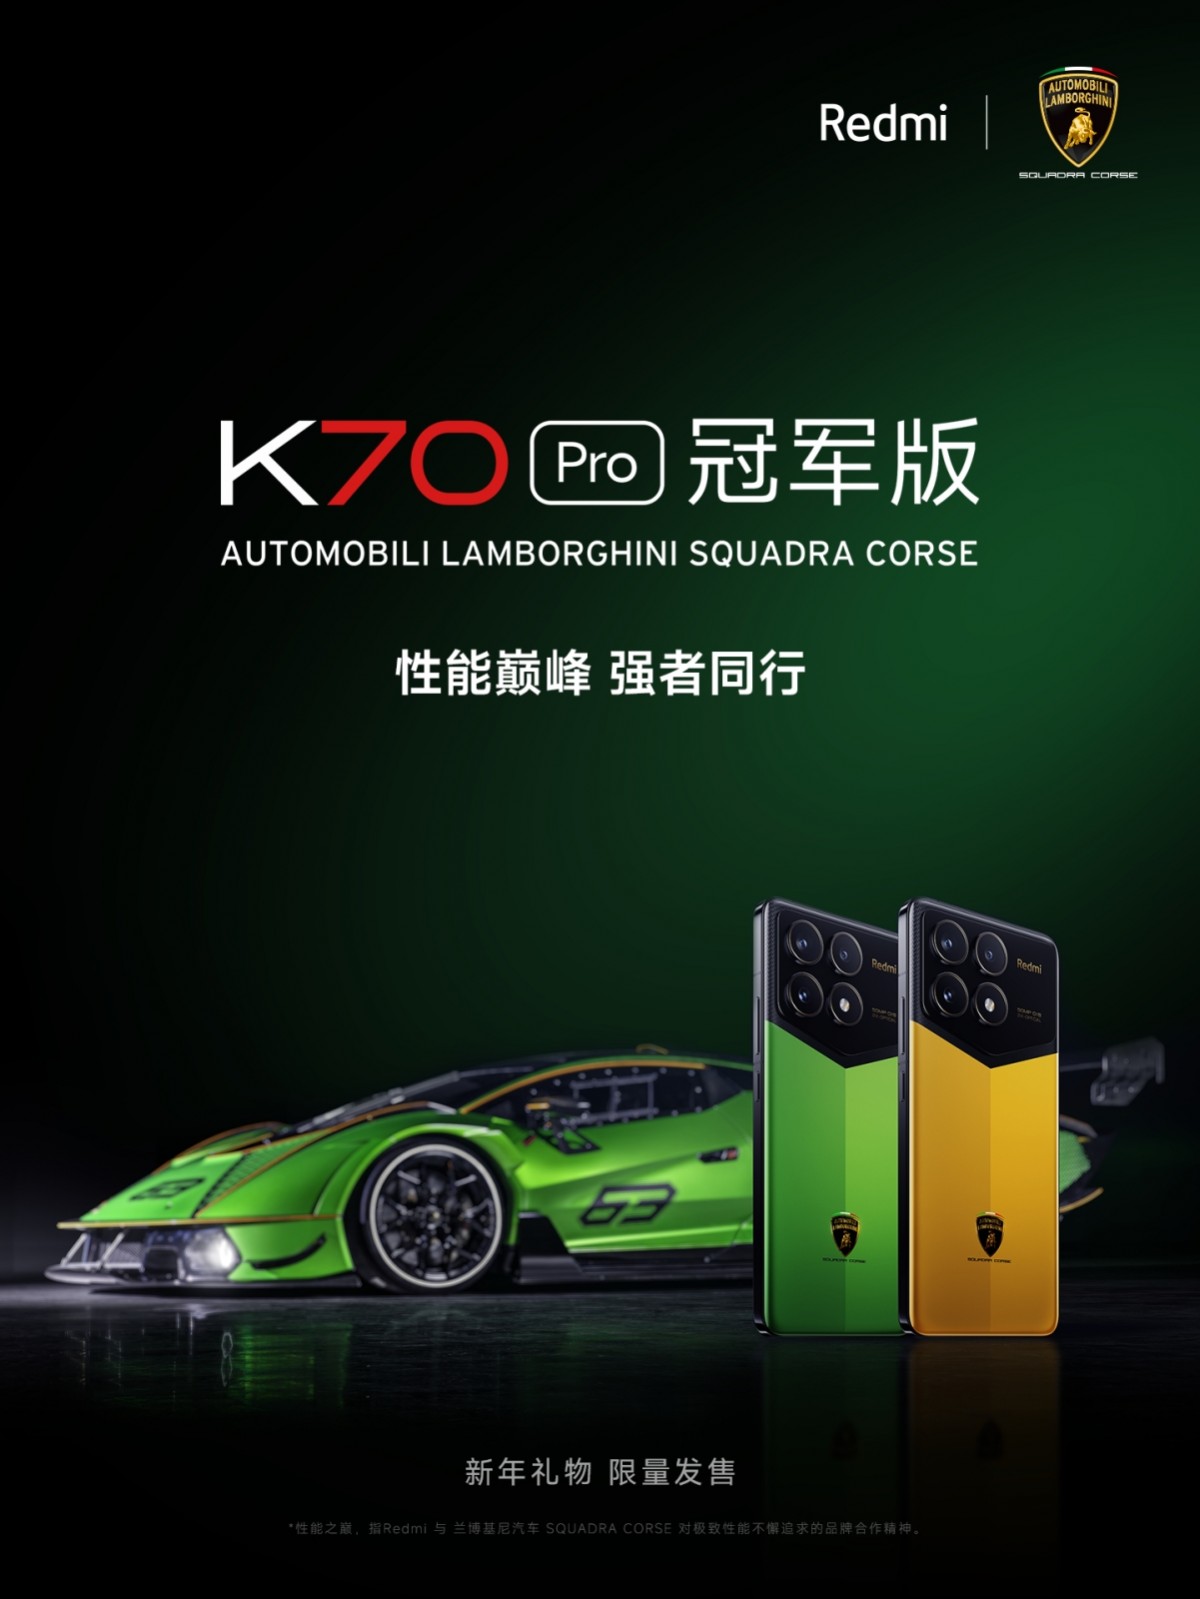 يأتي Redmi K70 Pro Automobili Lamborghini Squadra Corse مزودًا بذاكرة وصول عشوائي (RAM) سعة 24 جيجابايت وتخزين 1 تيرابايت